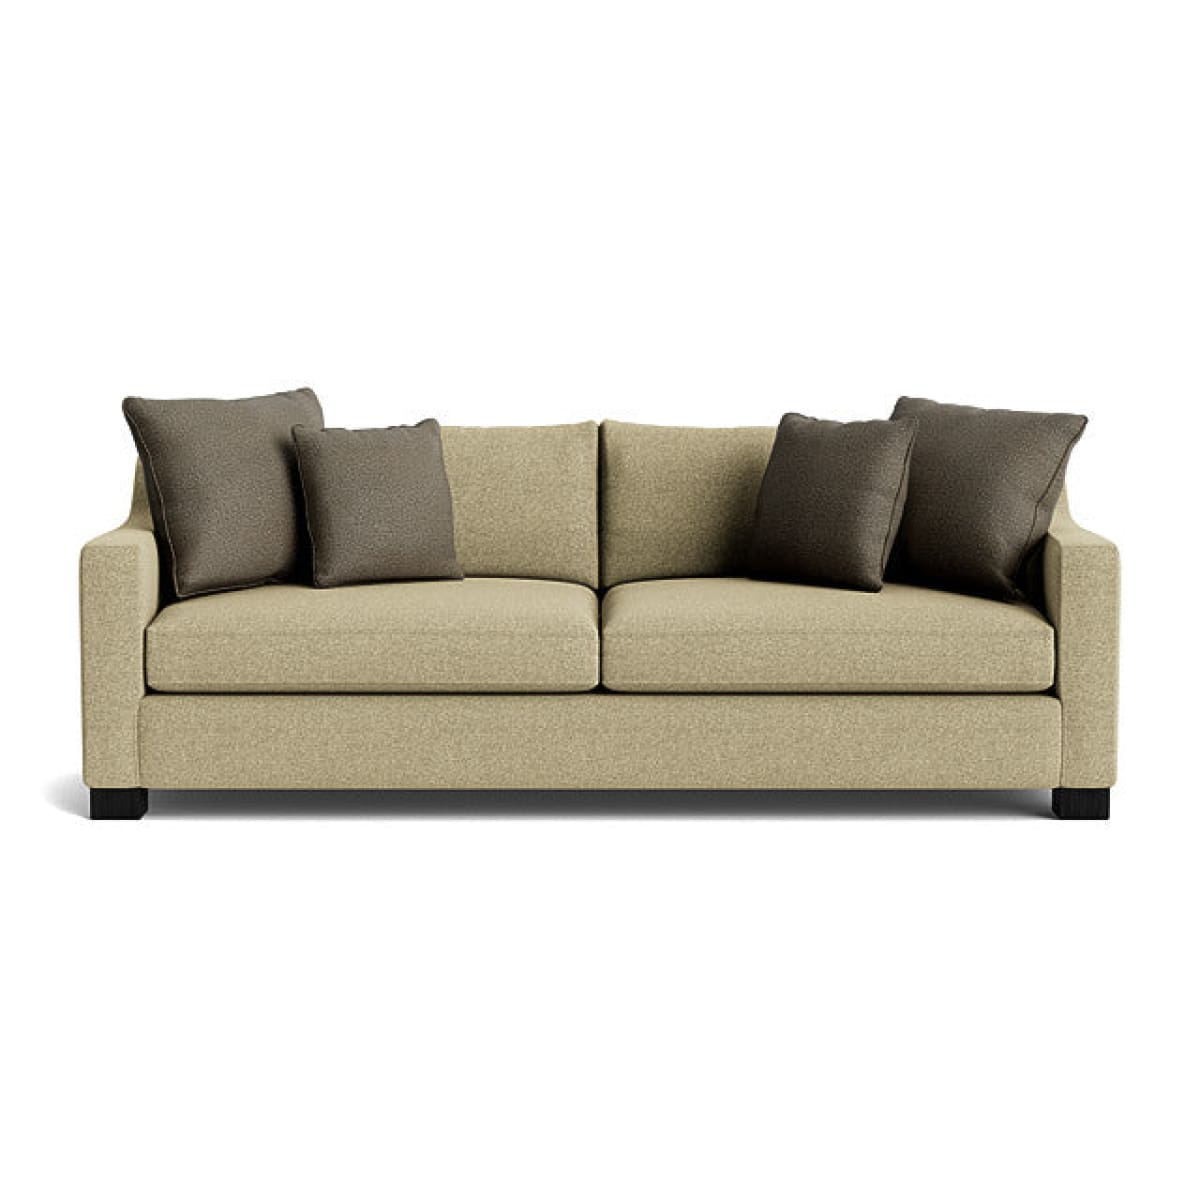 Ewing Sofa - Sectional - Element Sandstone